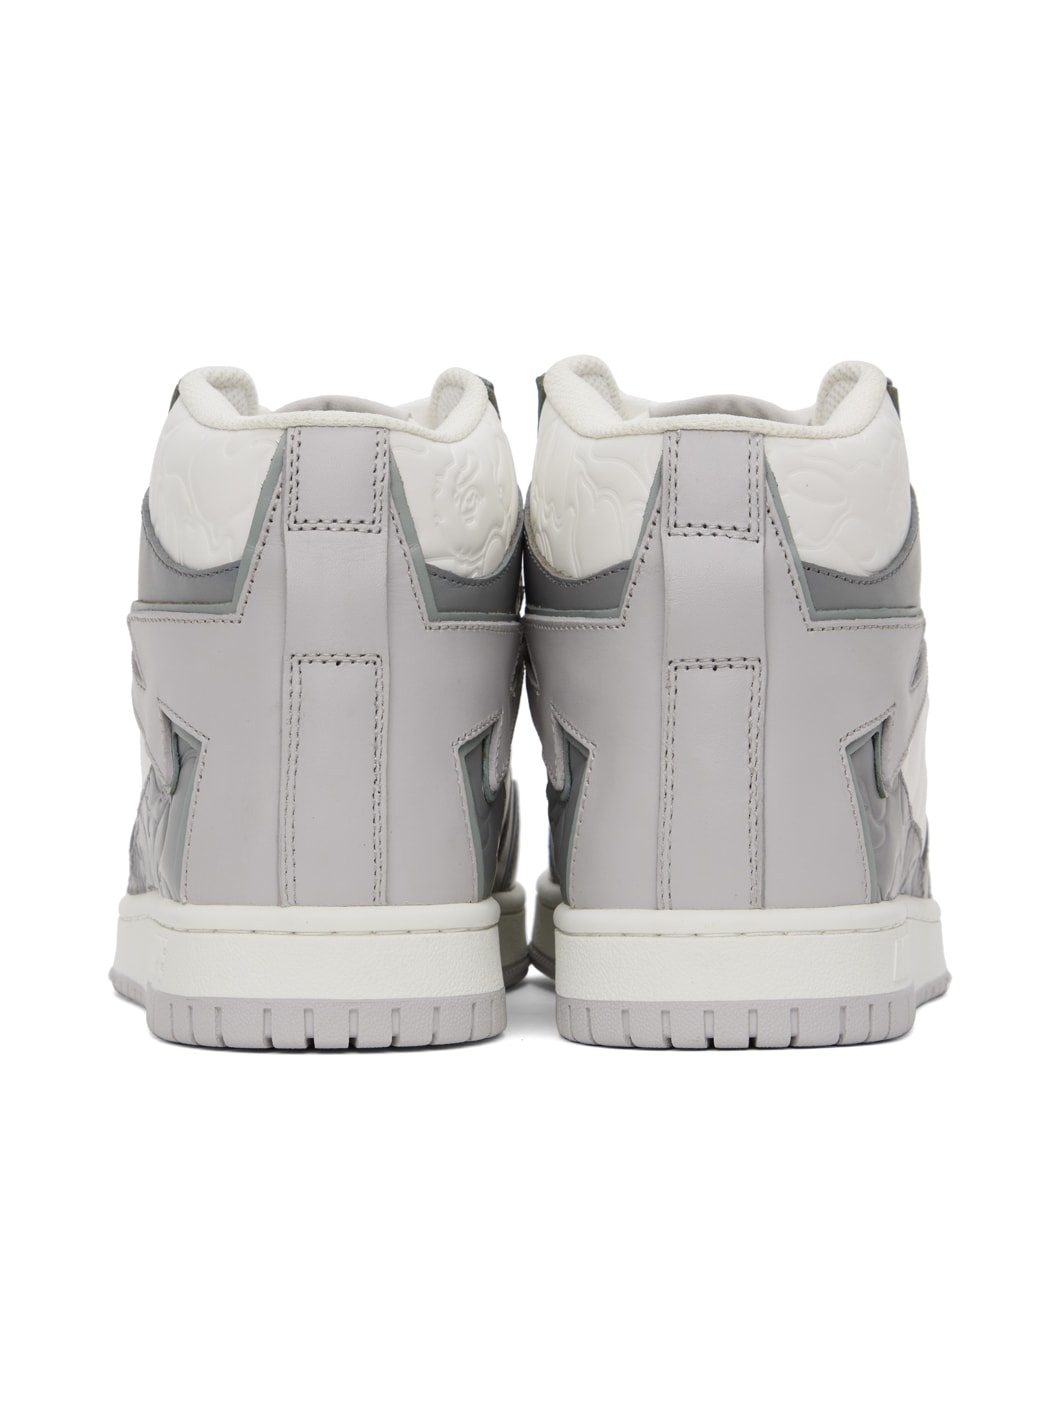 Gray & White STA 88 Mid #1 M1 Sneakers - 2